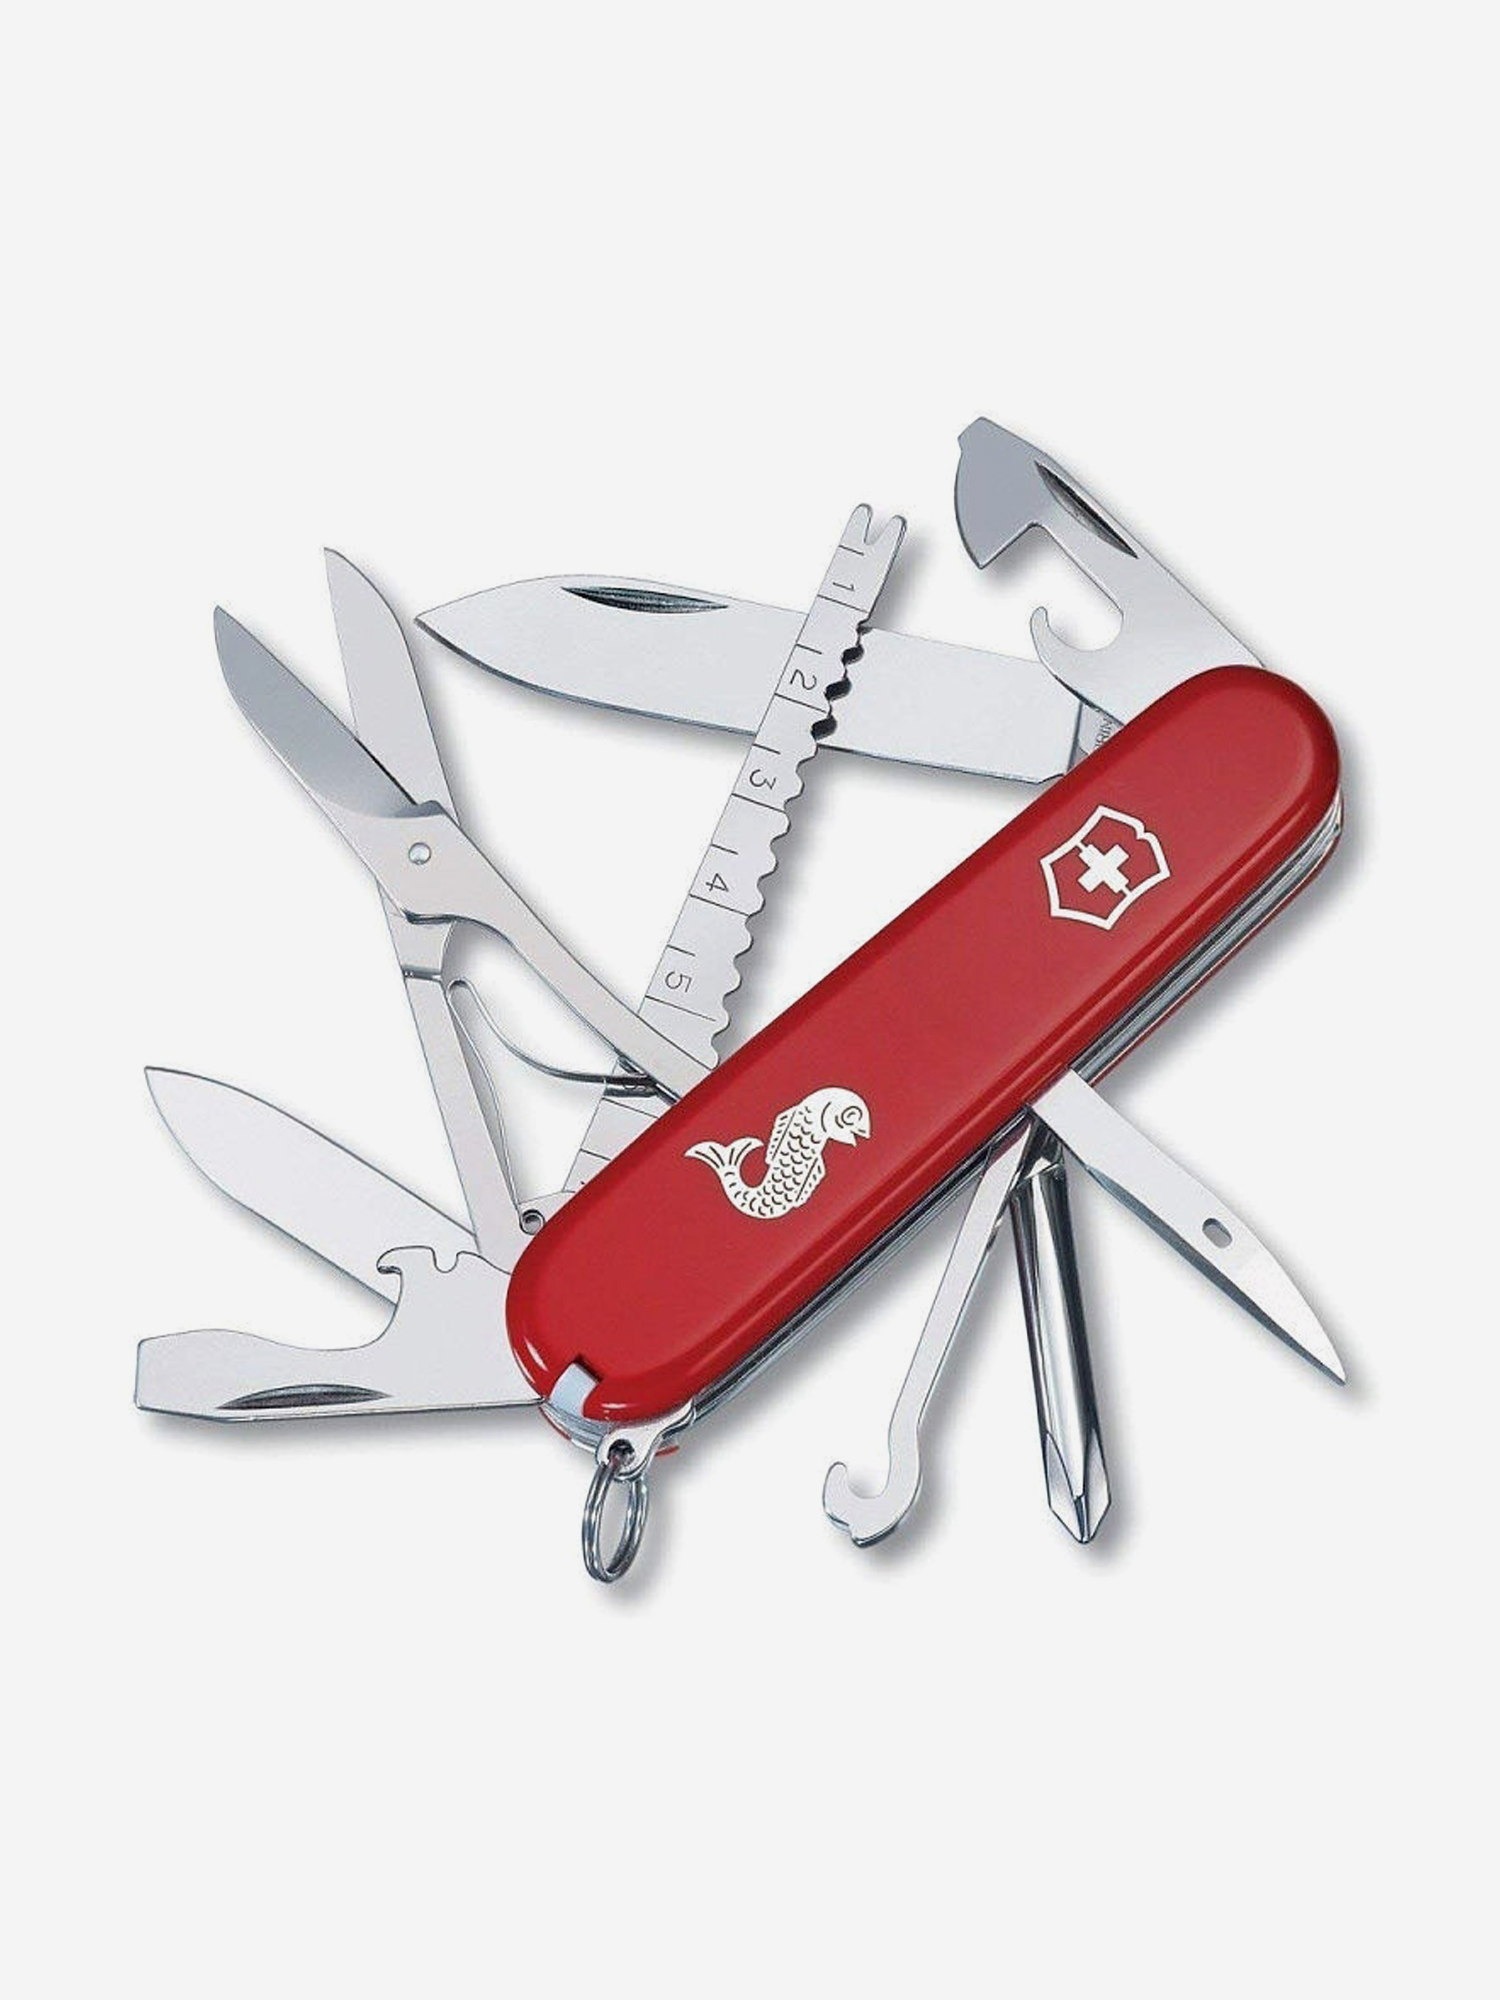 Нож складной Victorinox Fisherman, 91 мм, 18 функций, Красный нож складной victorinox super tinker 91 мм 14 функций красный